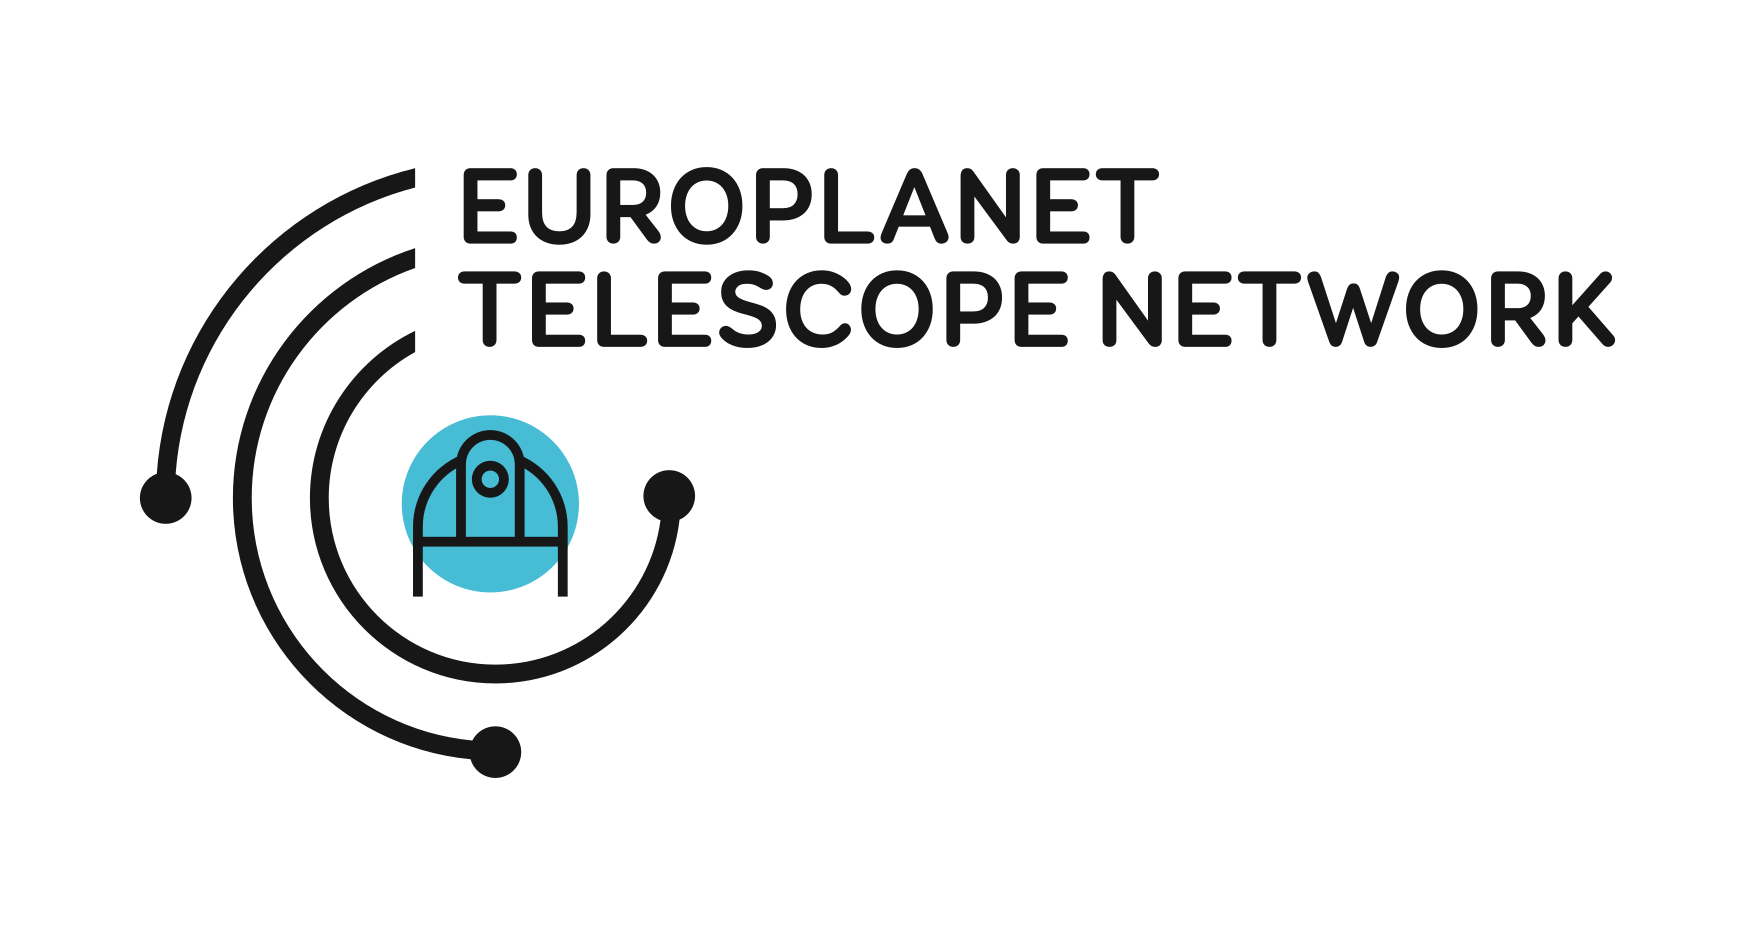 Europlanet Telescope Network logo